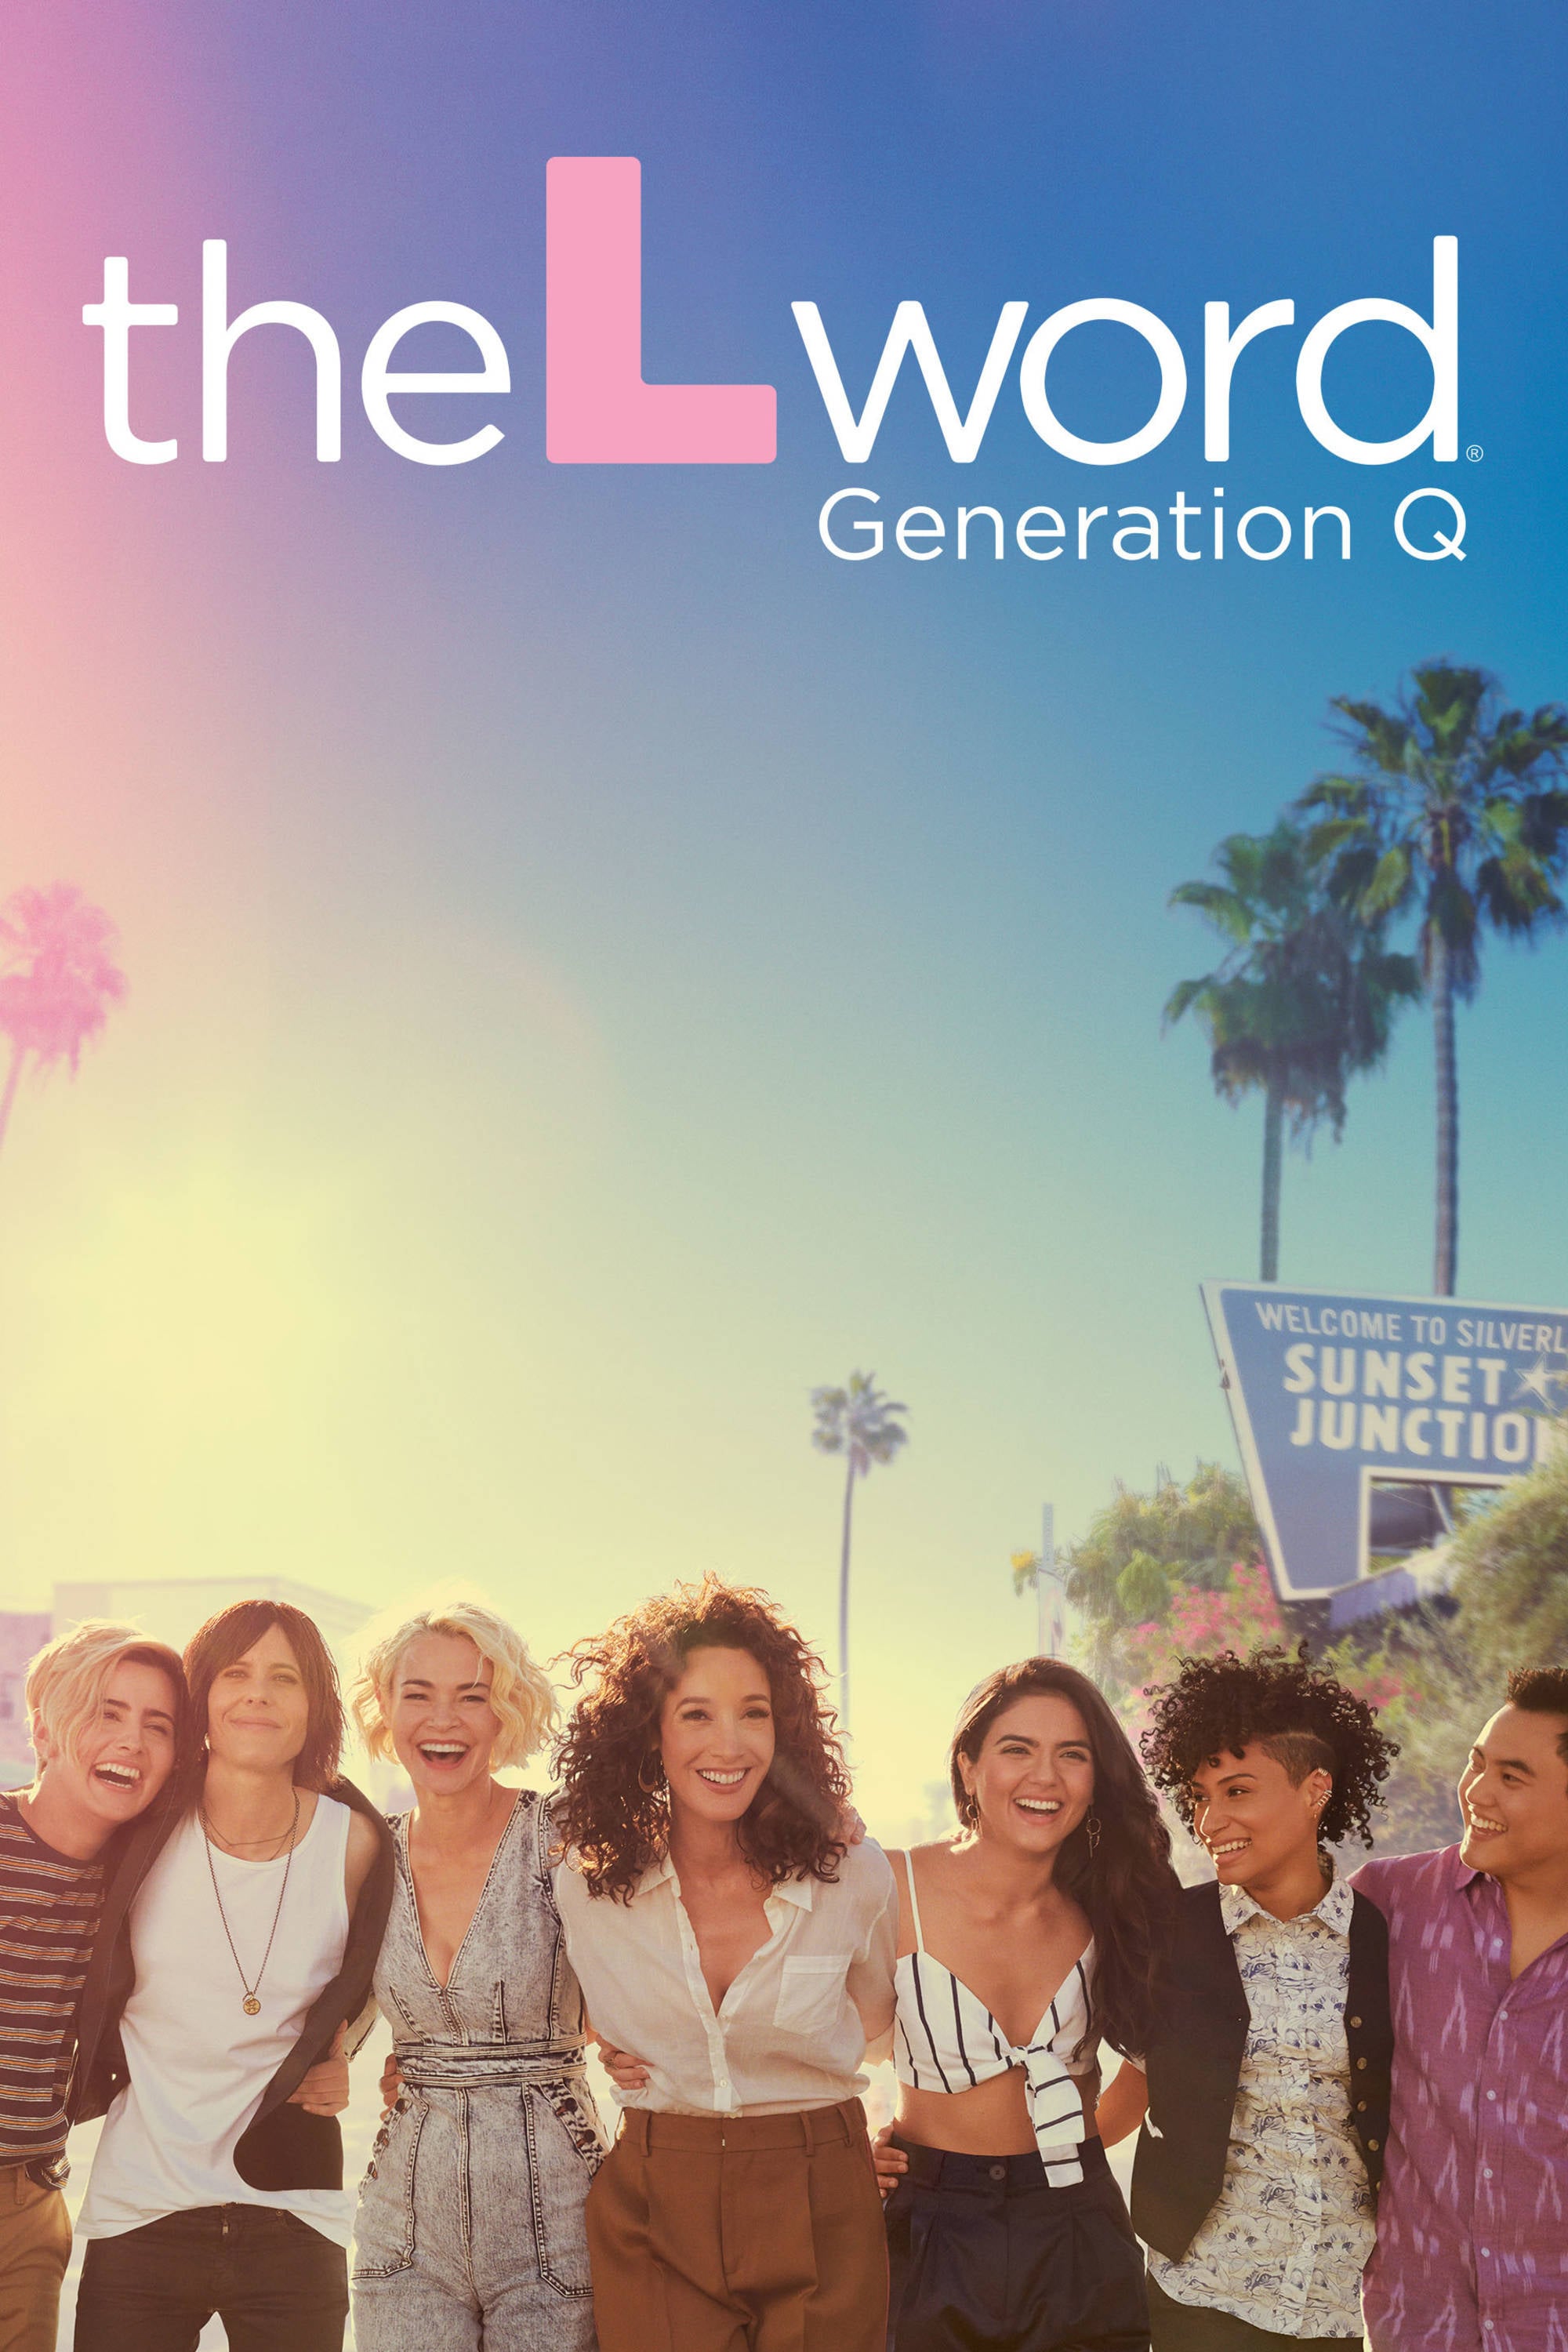 The L Word : Generation Q